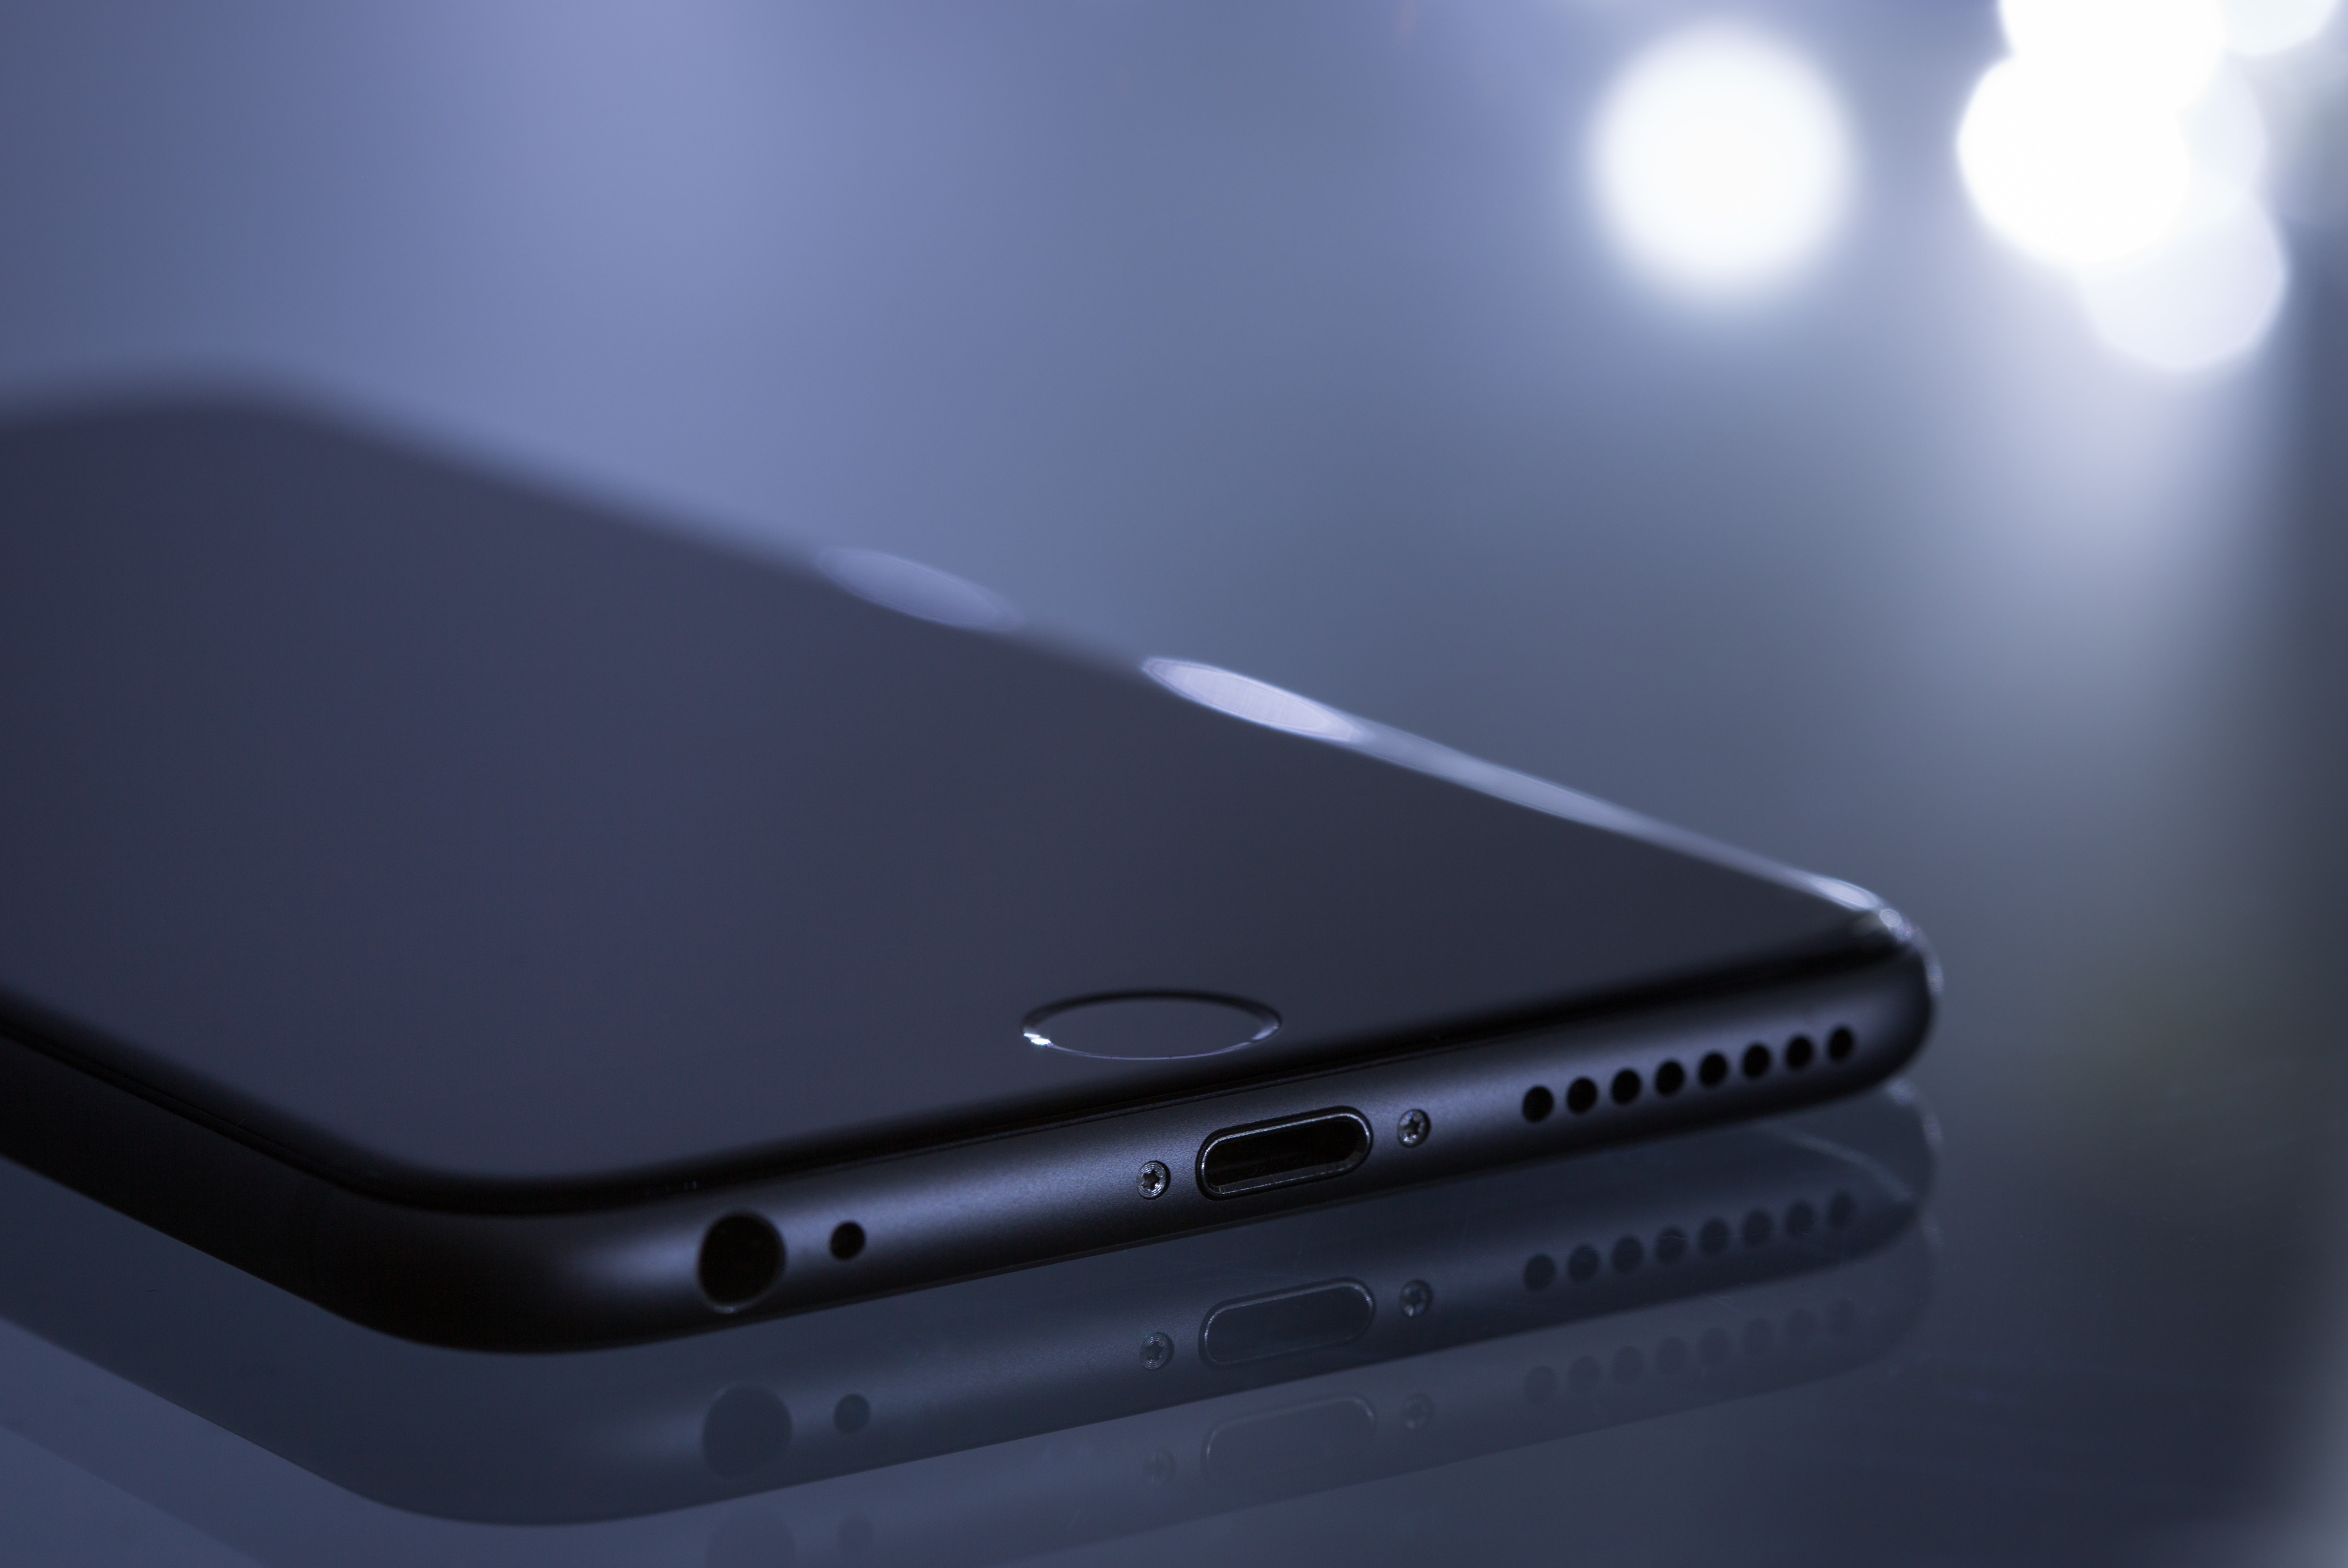 images/news/2019/apple-close-up-electronics